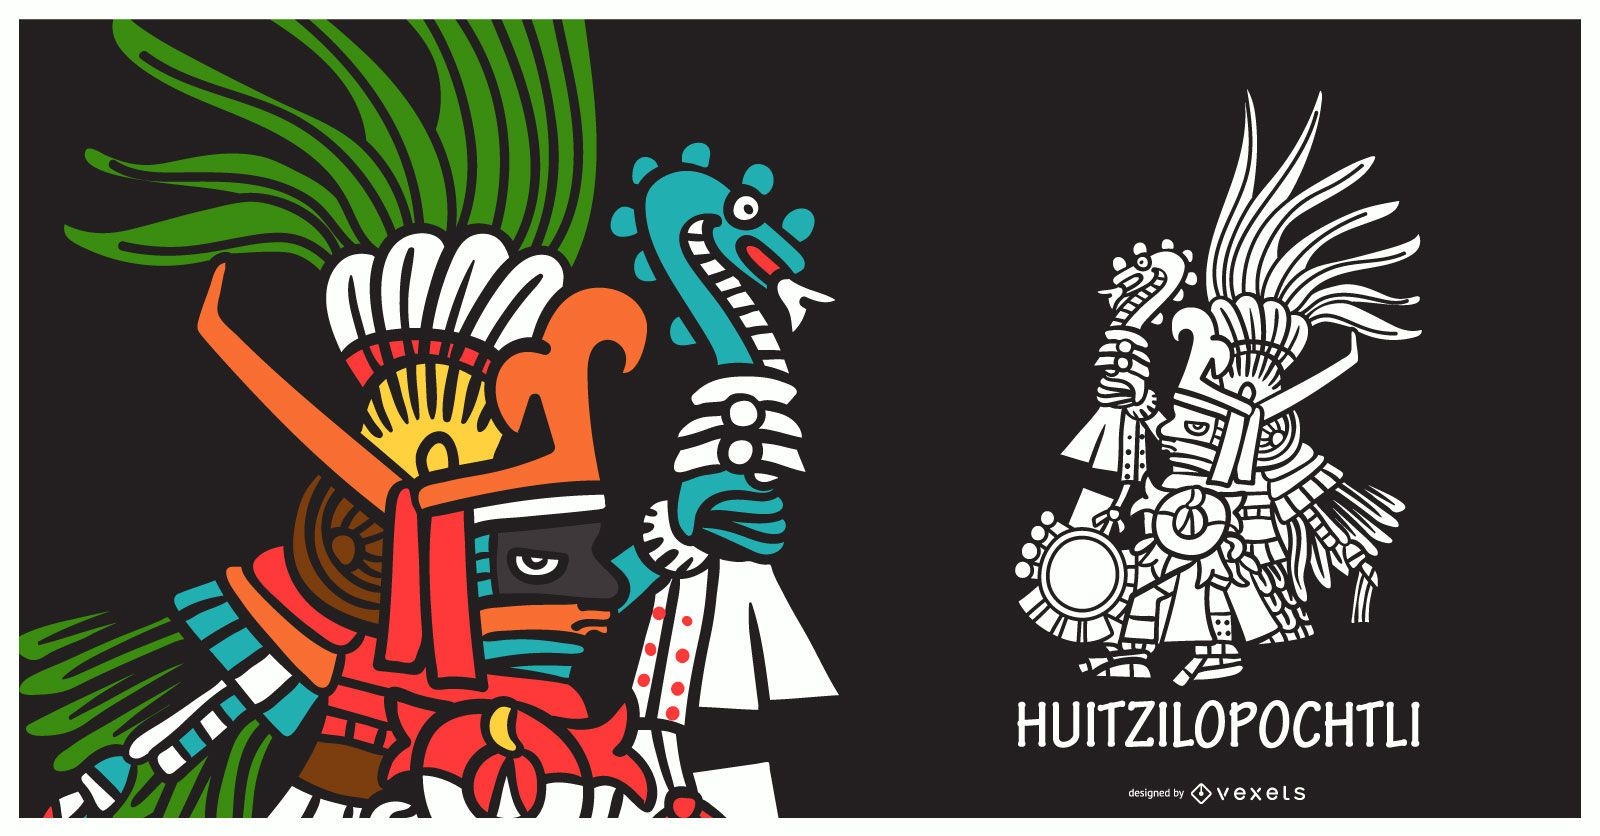 Ilustraci?n del dios azteca huitzilopochtli